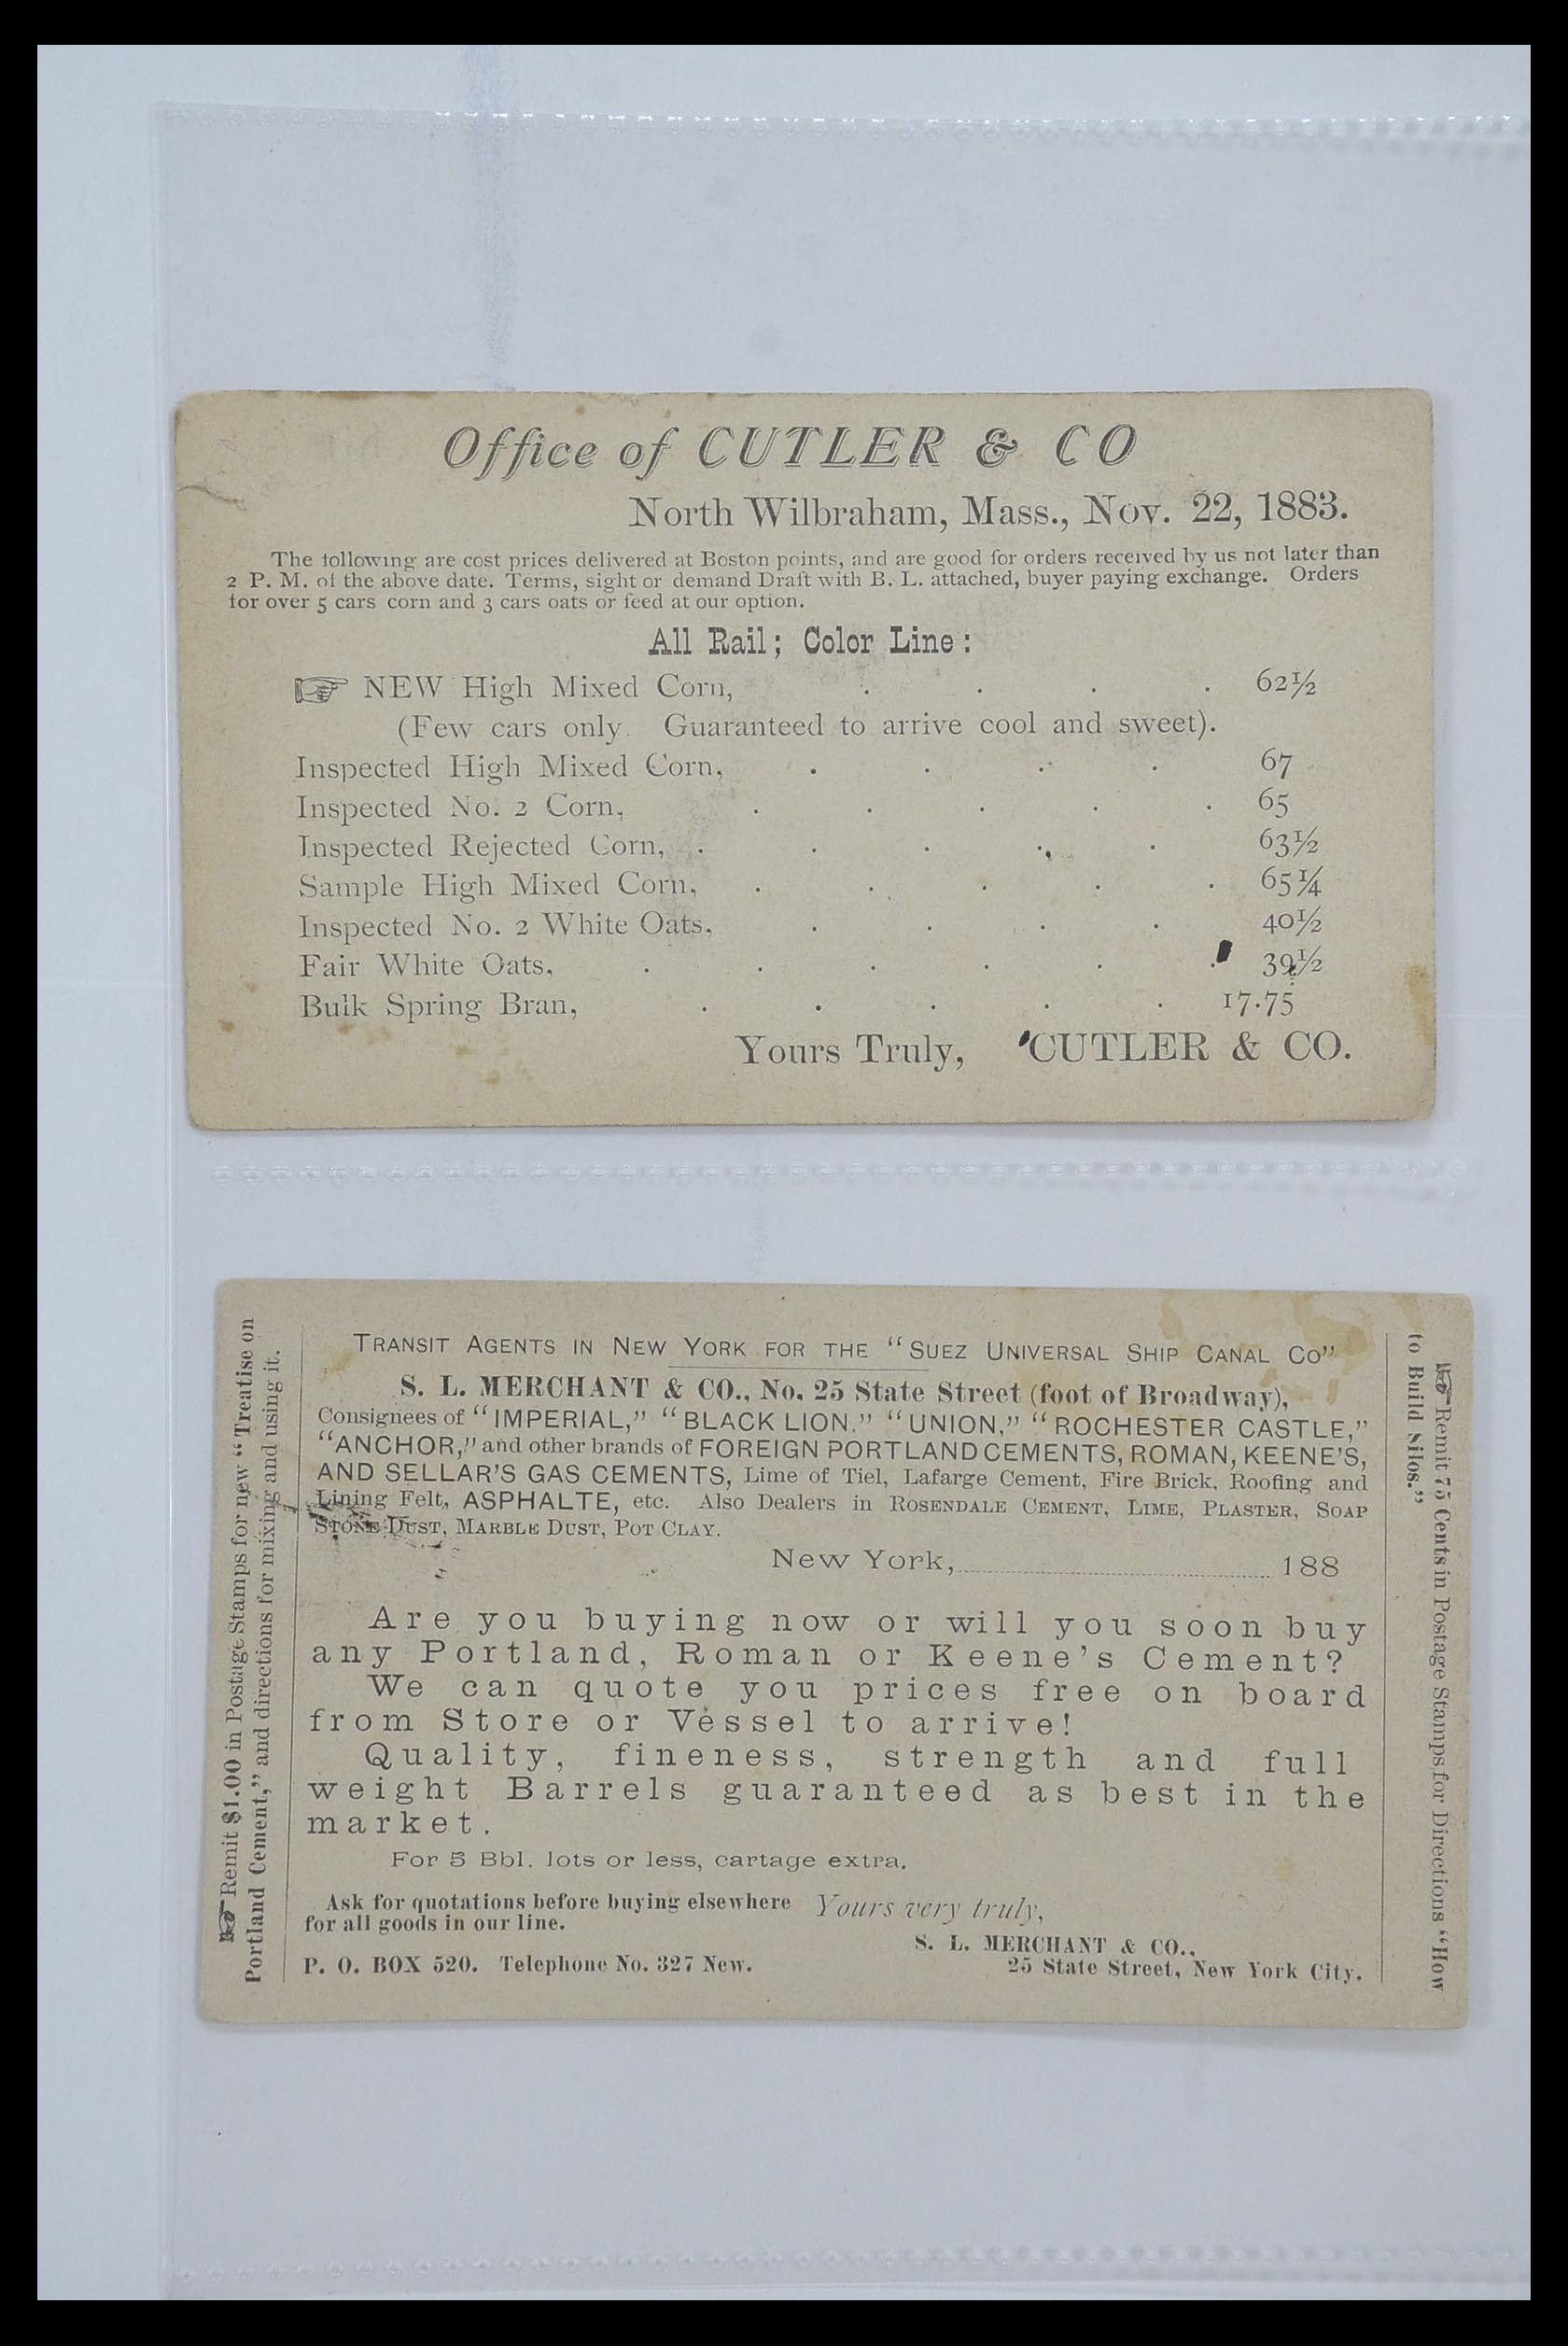 33501 020 - Stamp collection 33501 USA postal cards 1880-1920.